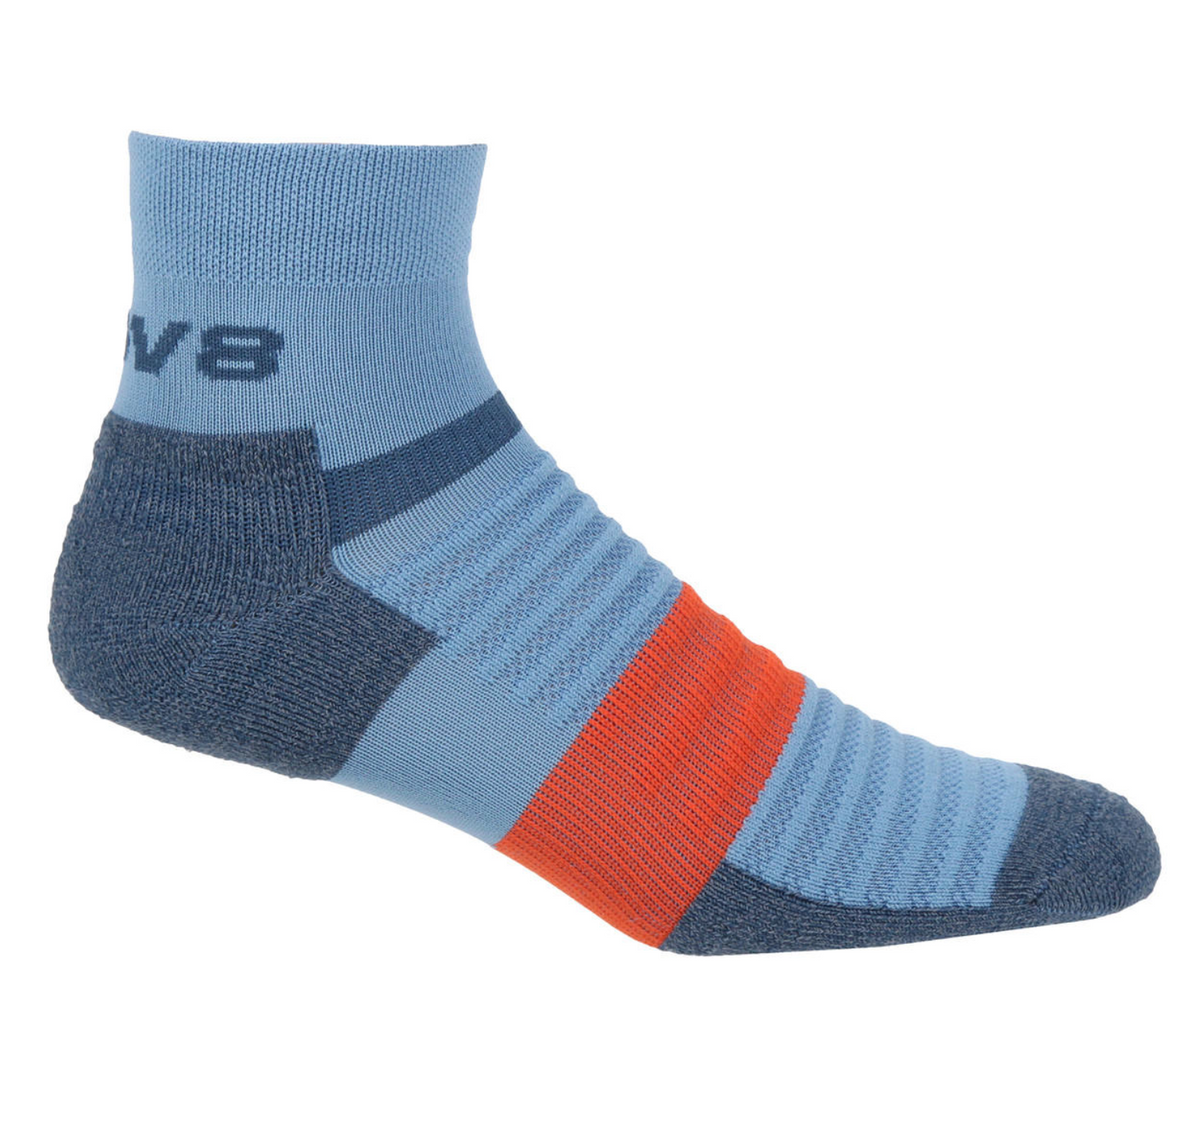 Inov8 Active Mid Sock